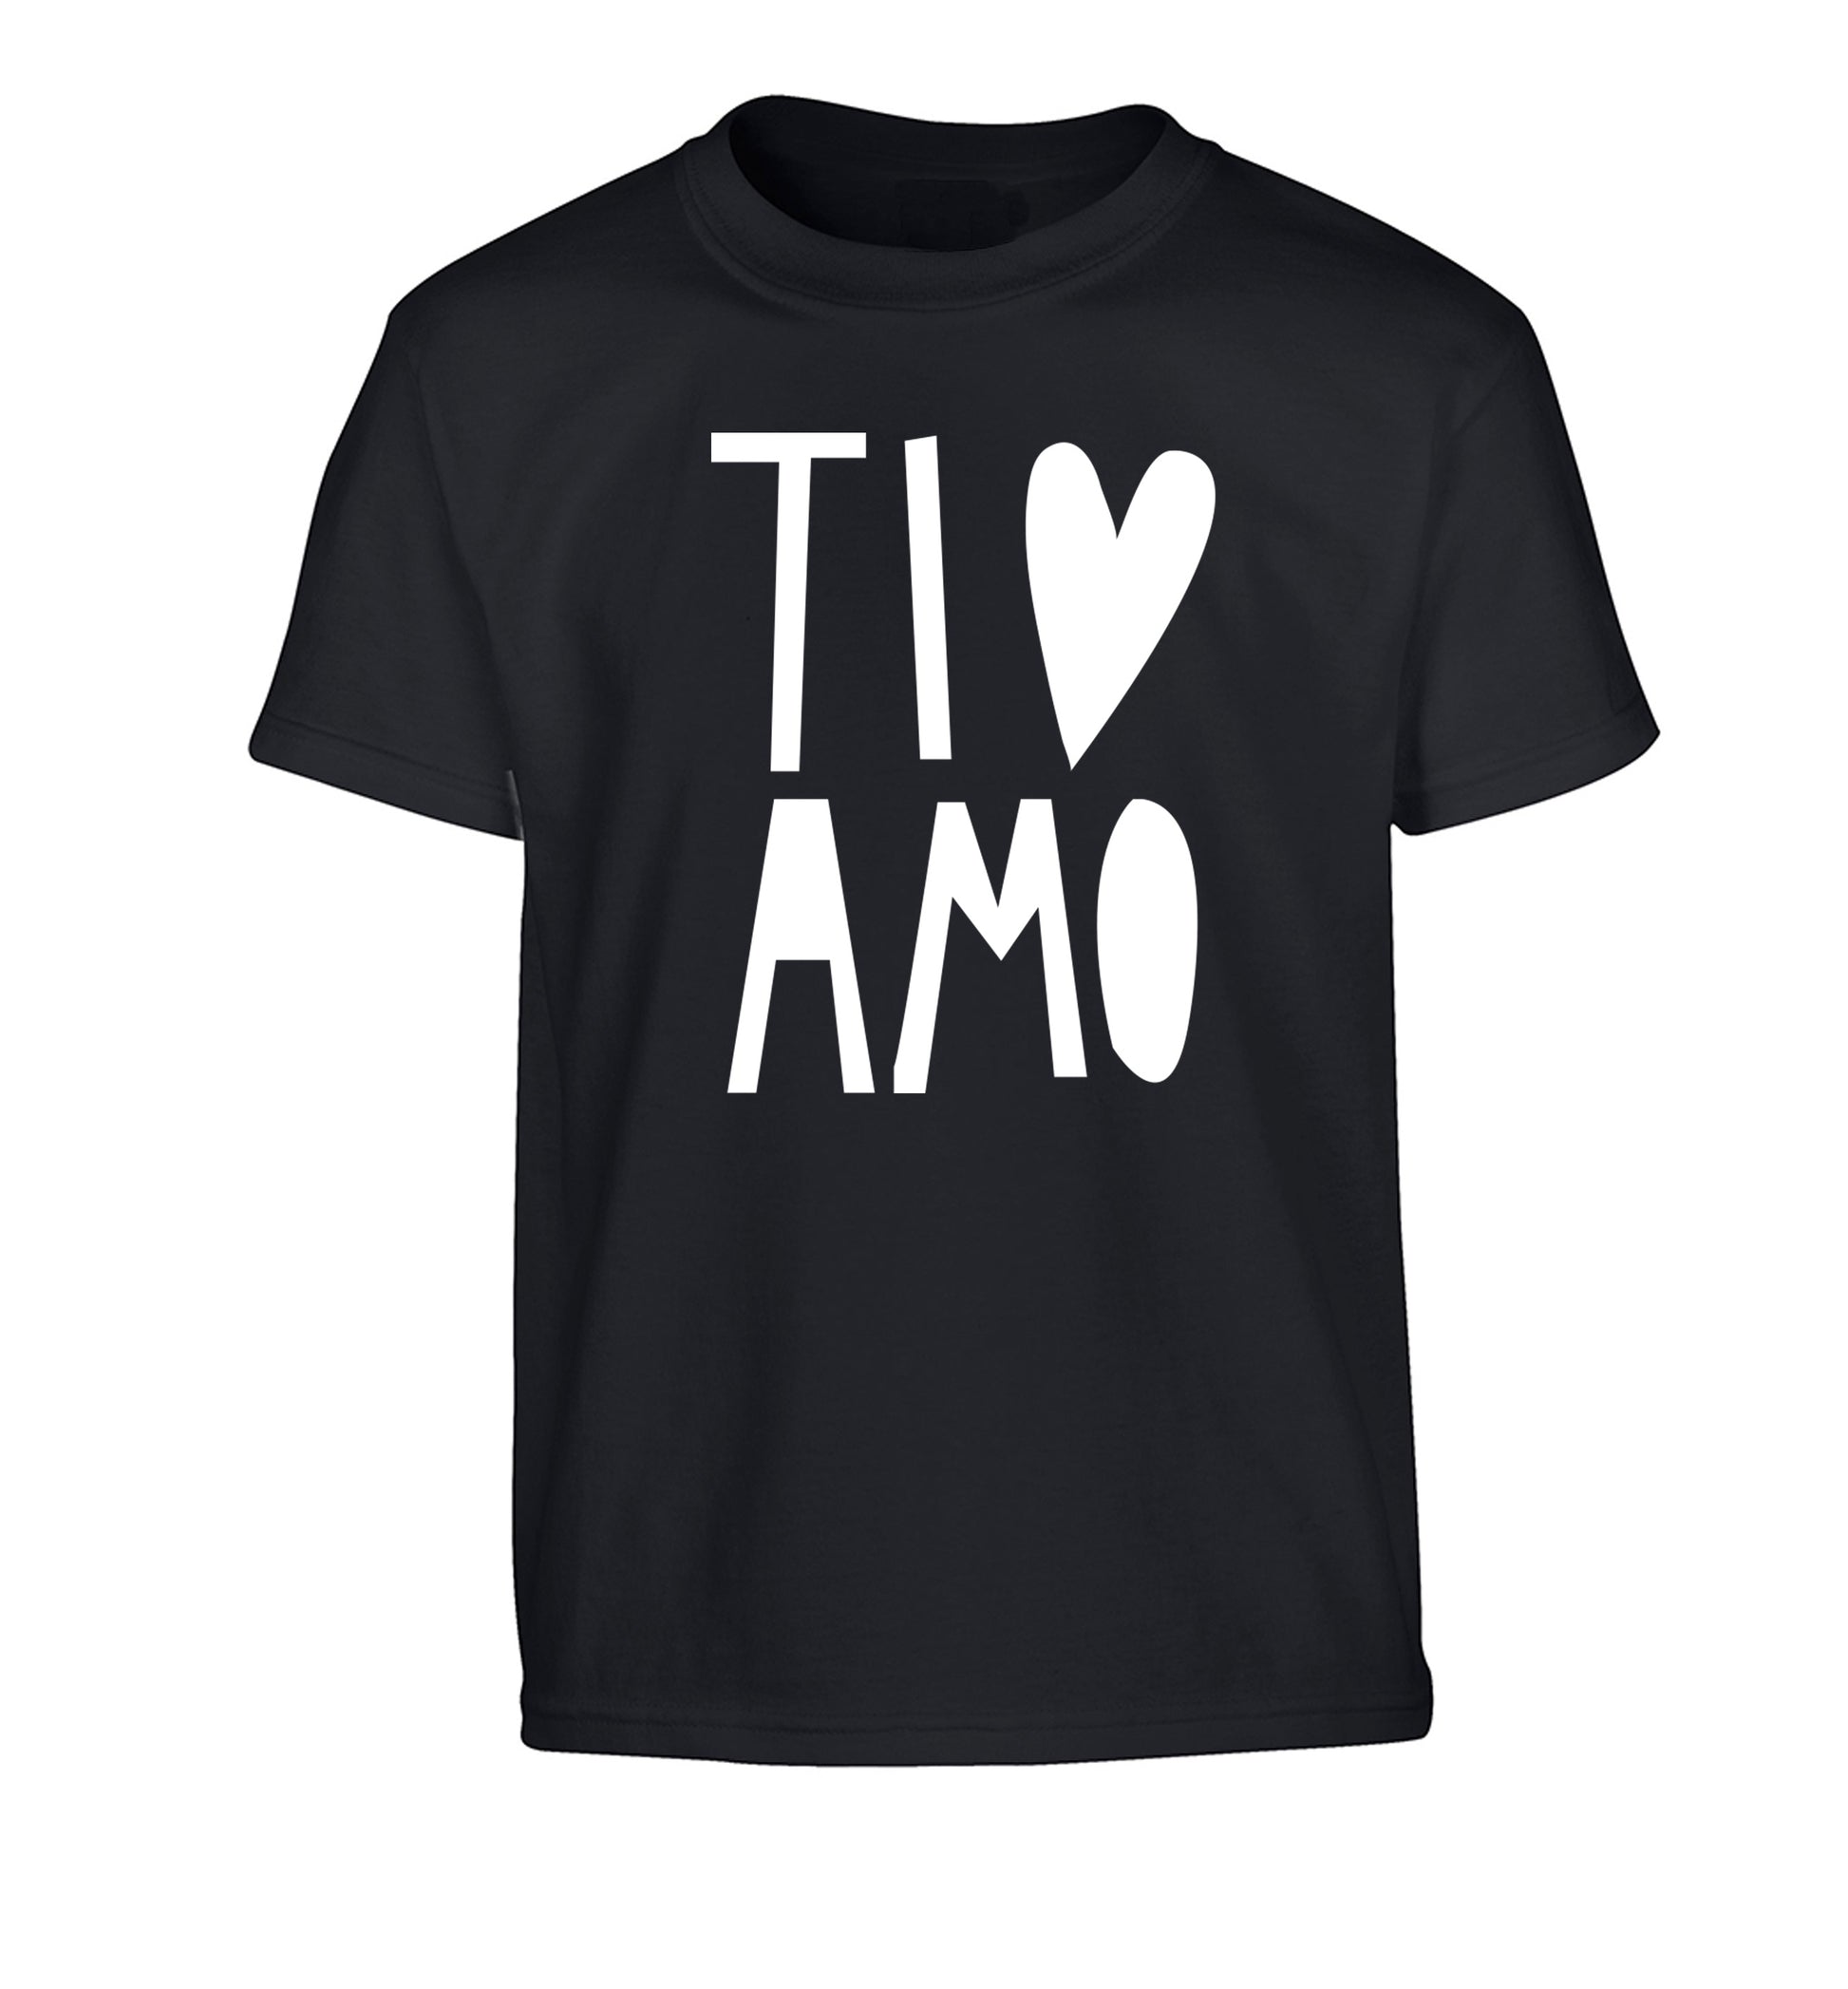 Ti amo - I love you Children's black Tshirt 12-13 Years